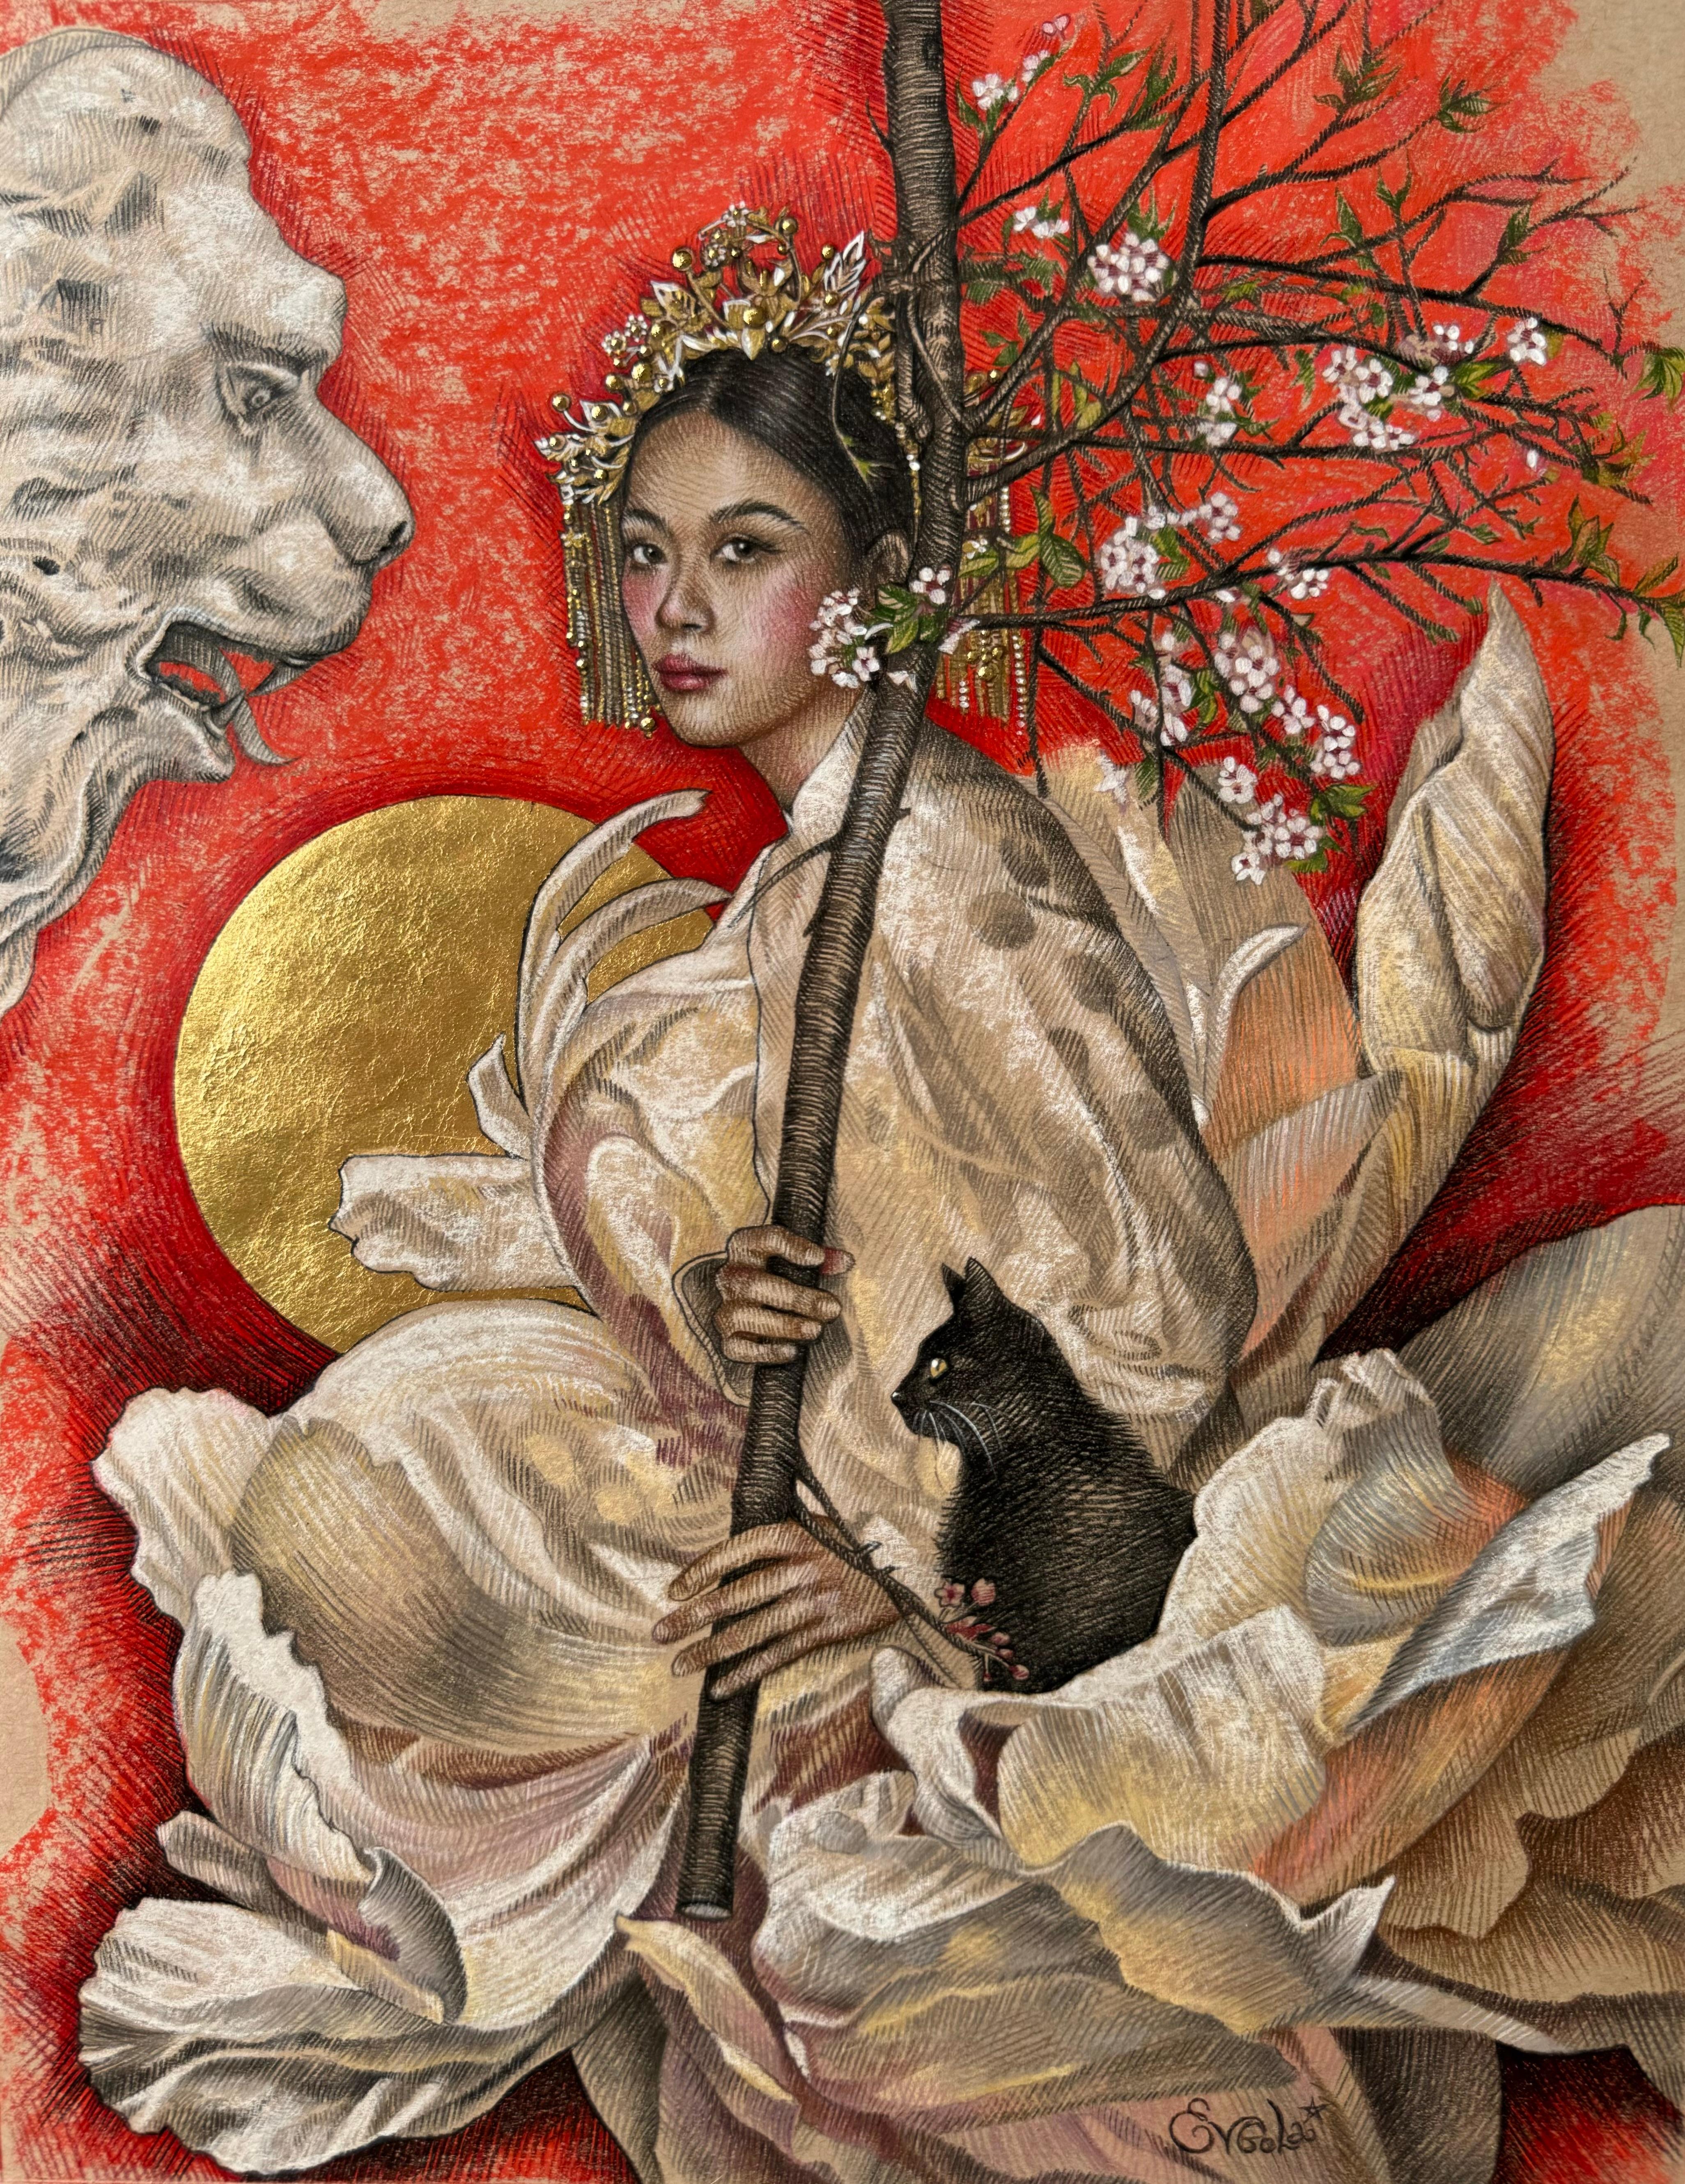 Magic Realism Figurative Artwork, "Blossom (Queen of Wands)" by Evgeniya Golik - Mixed Media Art by Evgeniya Golik 